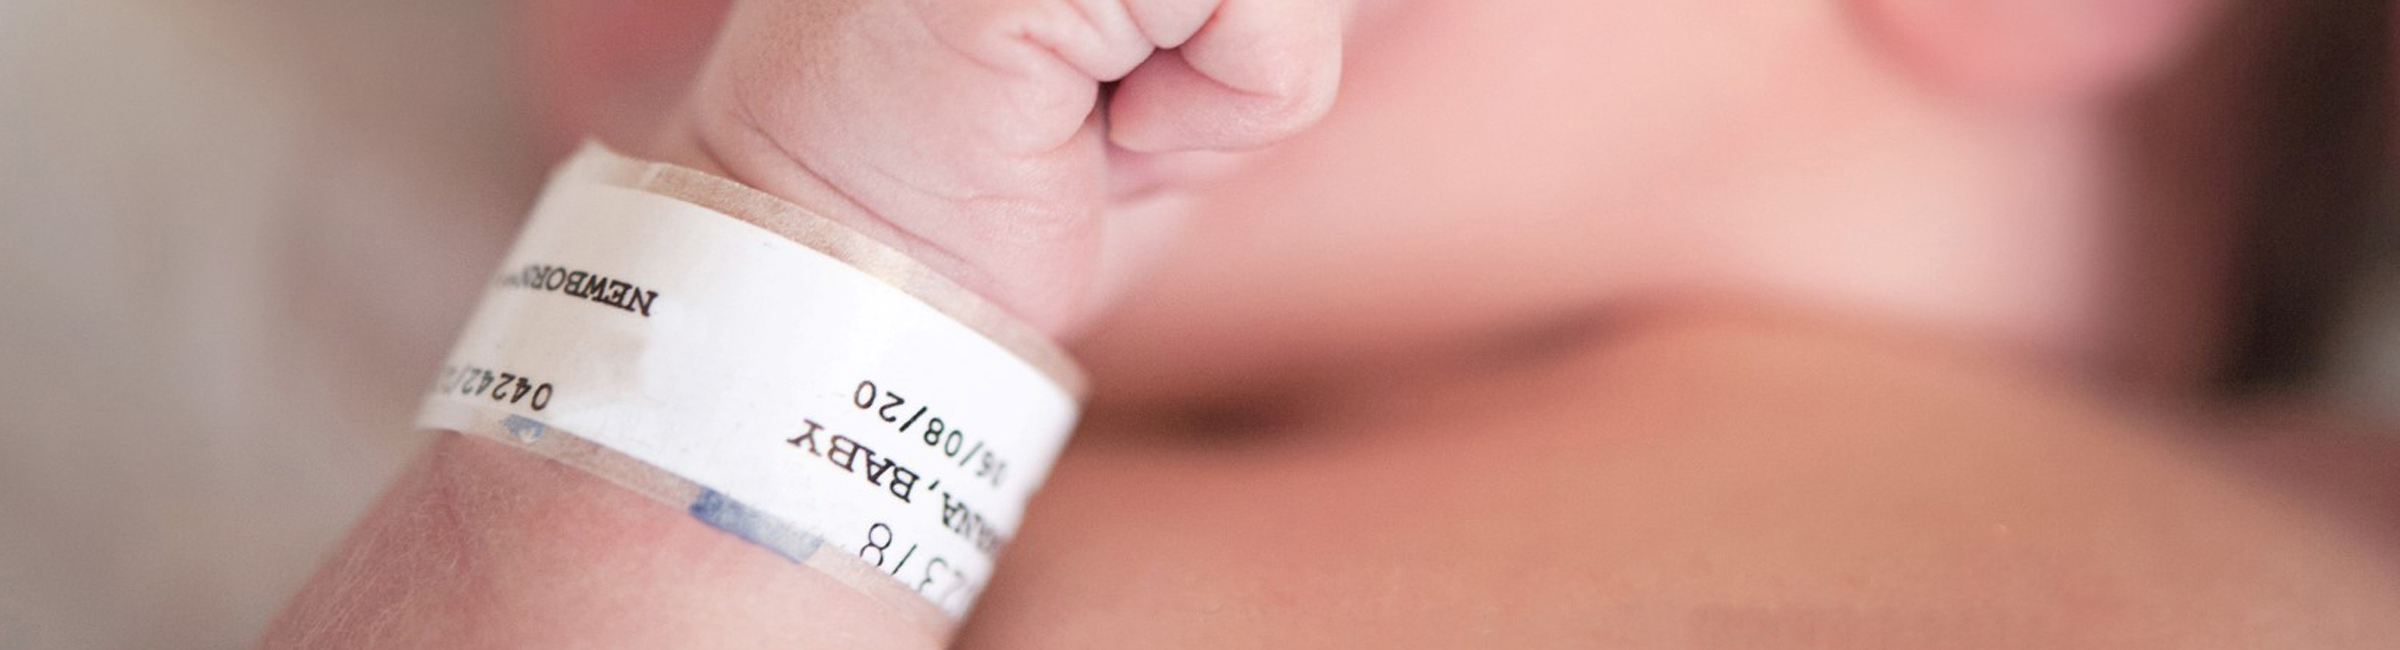 hospital baby identifcation wristband